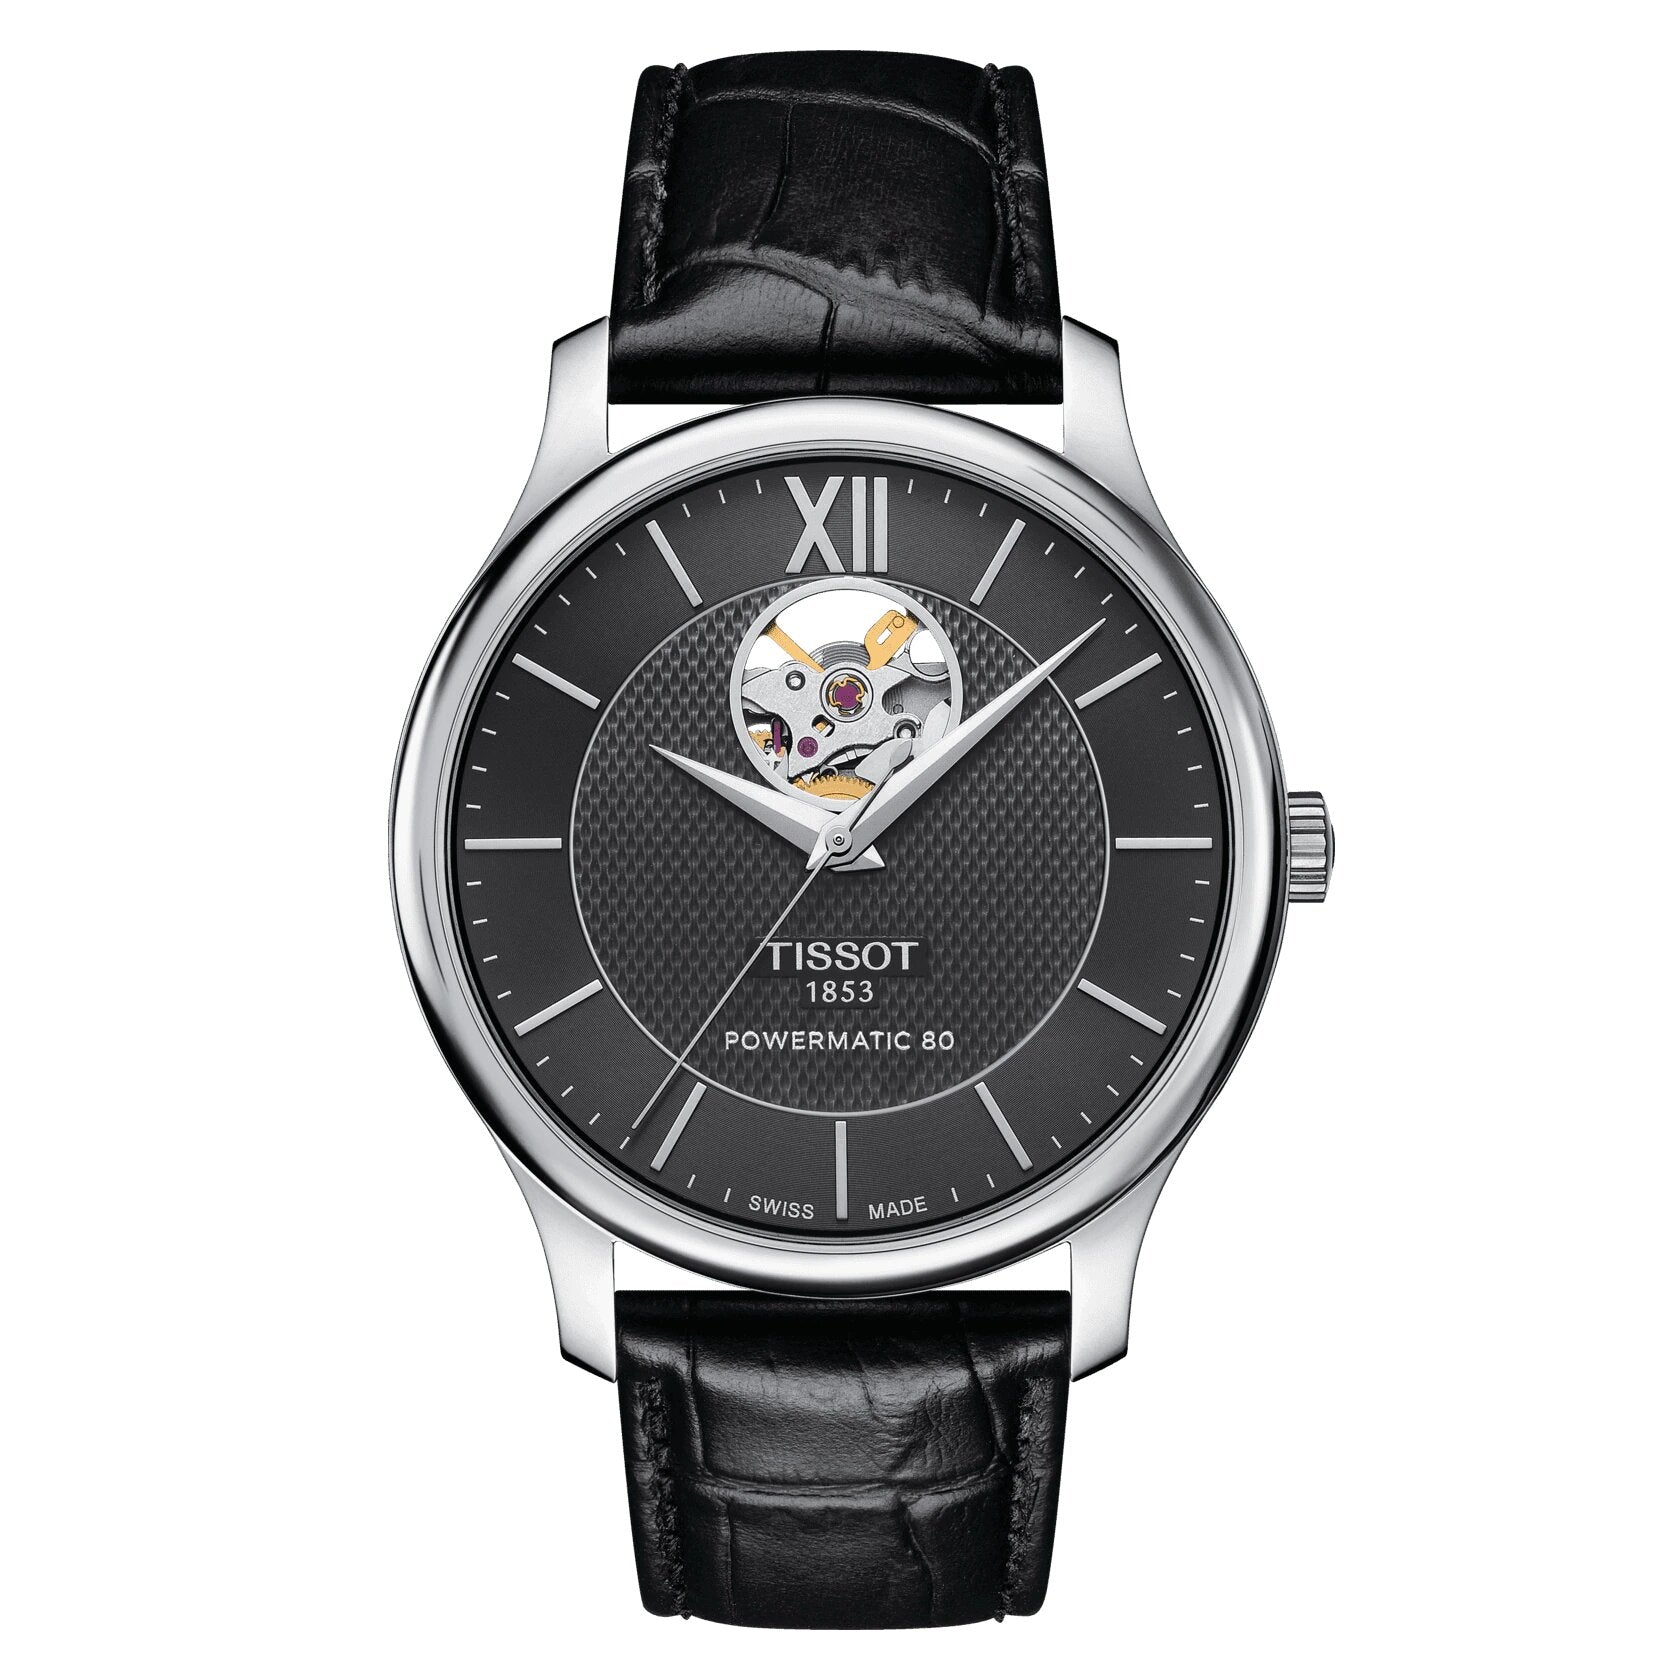 Tissot Tradition Powermatic 80 Open Heart Automatic Men's Watch T0639071605800